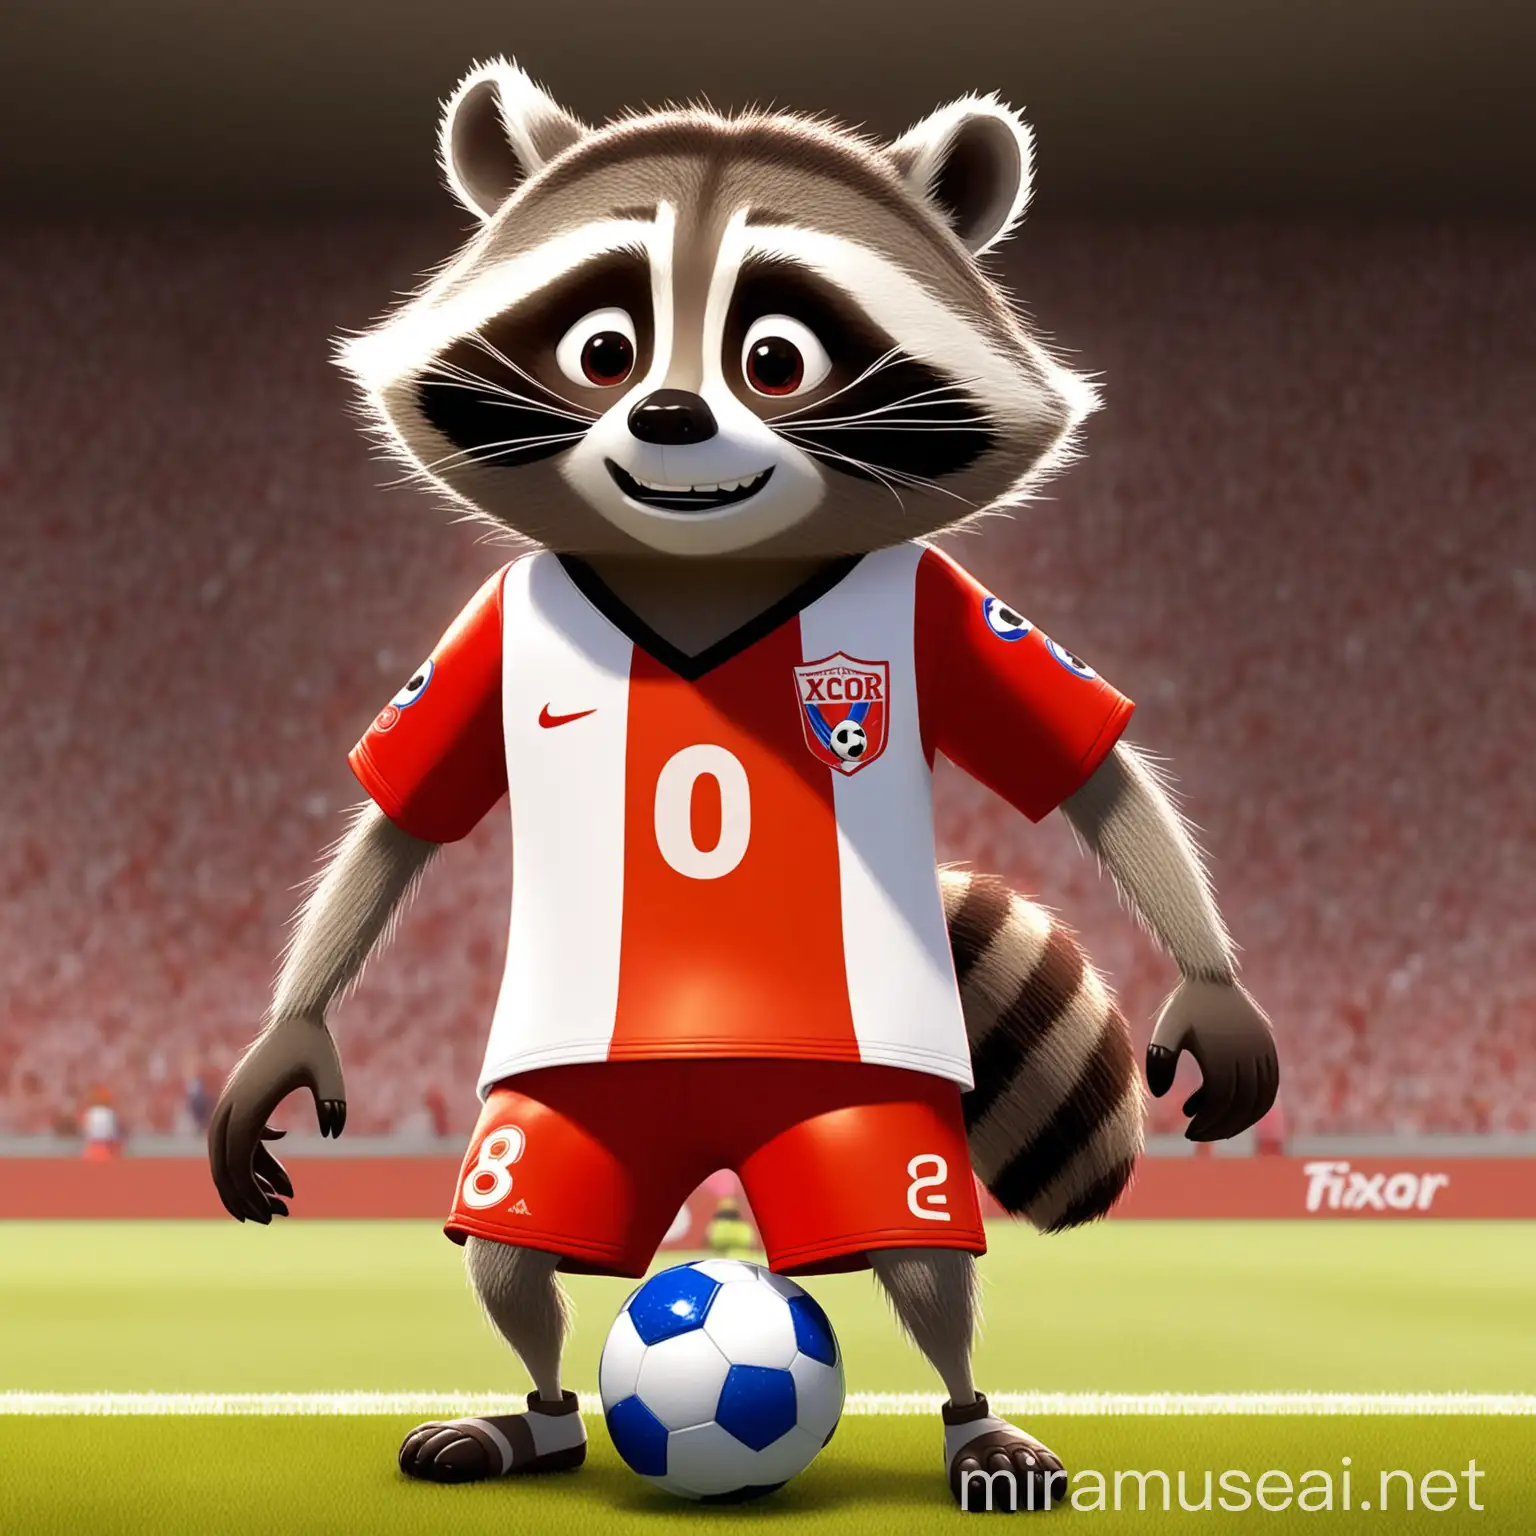 Raccoon Playing Soccer in a Pixaresque RedandWhite Setting